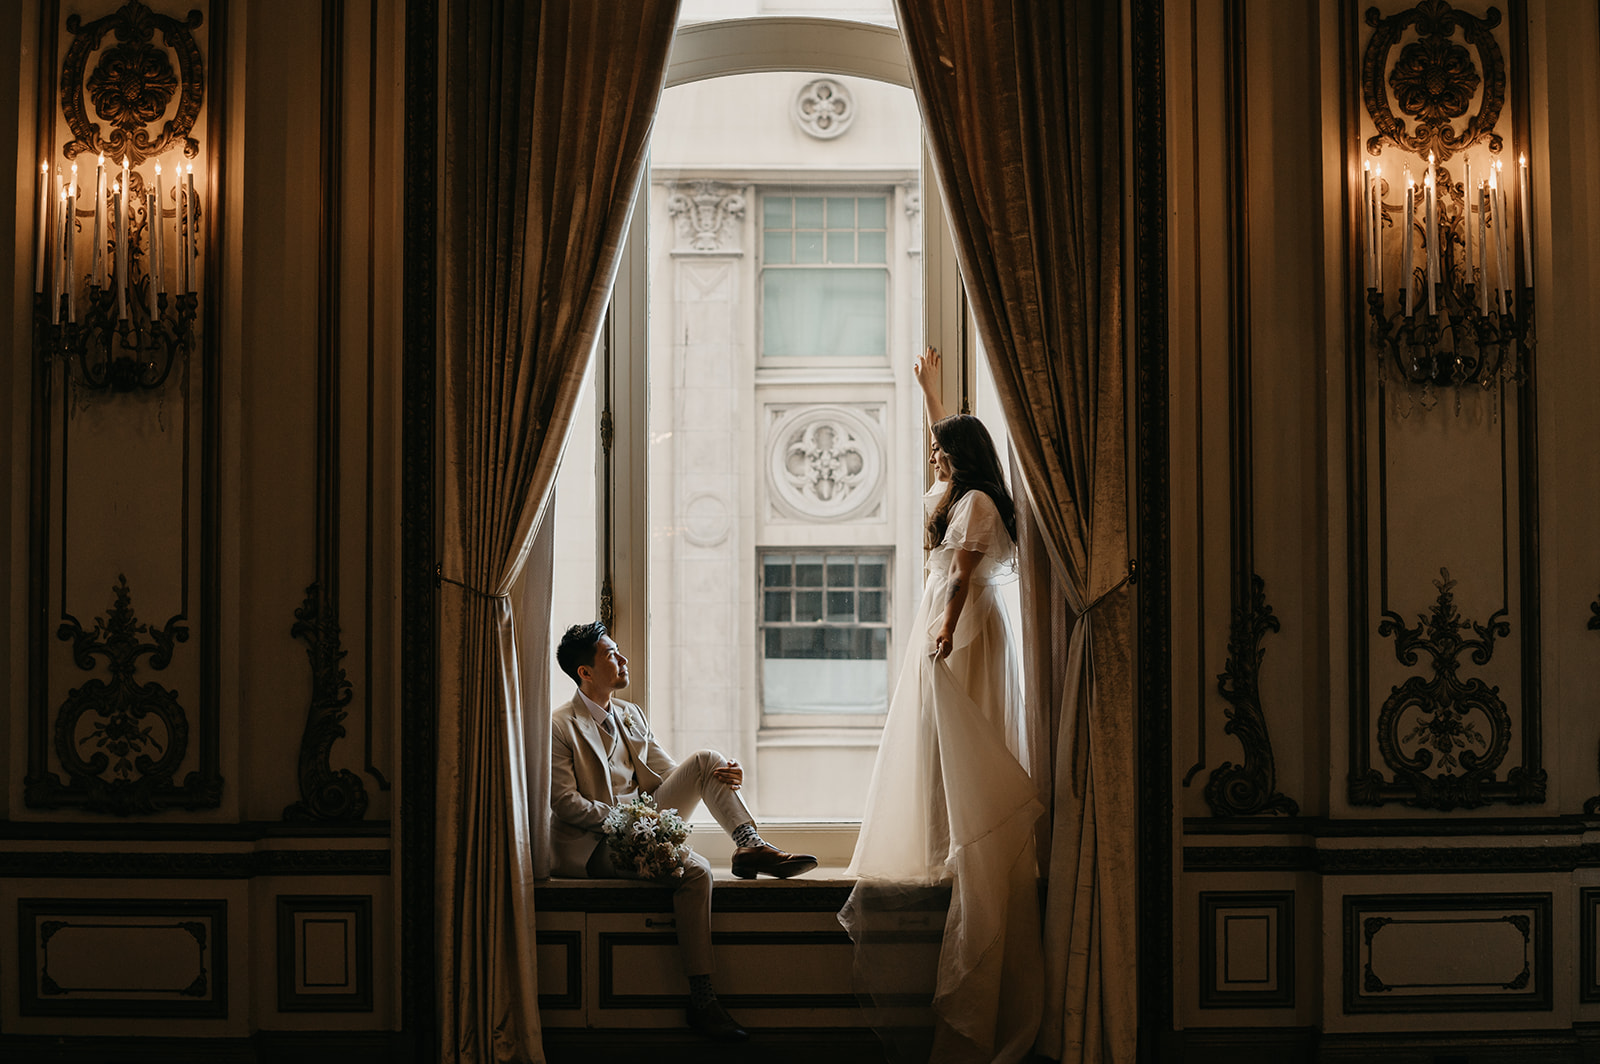 San Francisco Wedding Bride and groom in ornate window